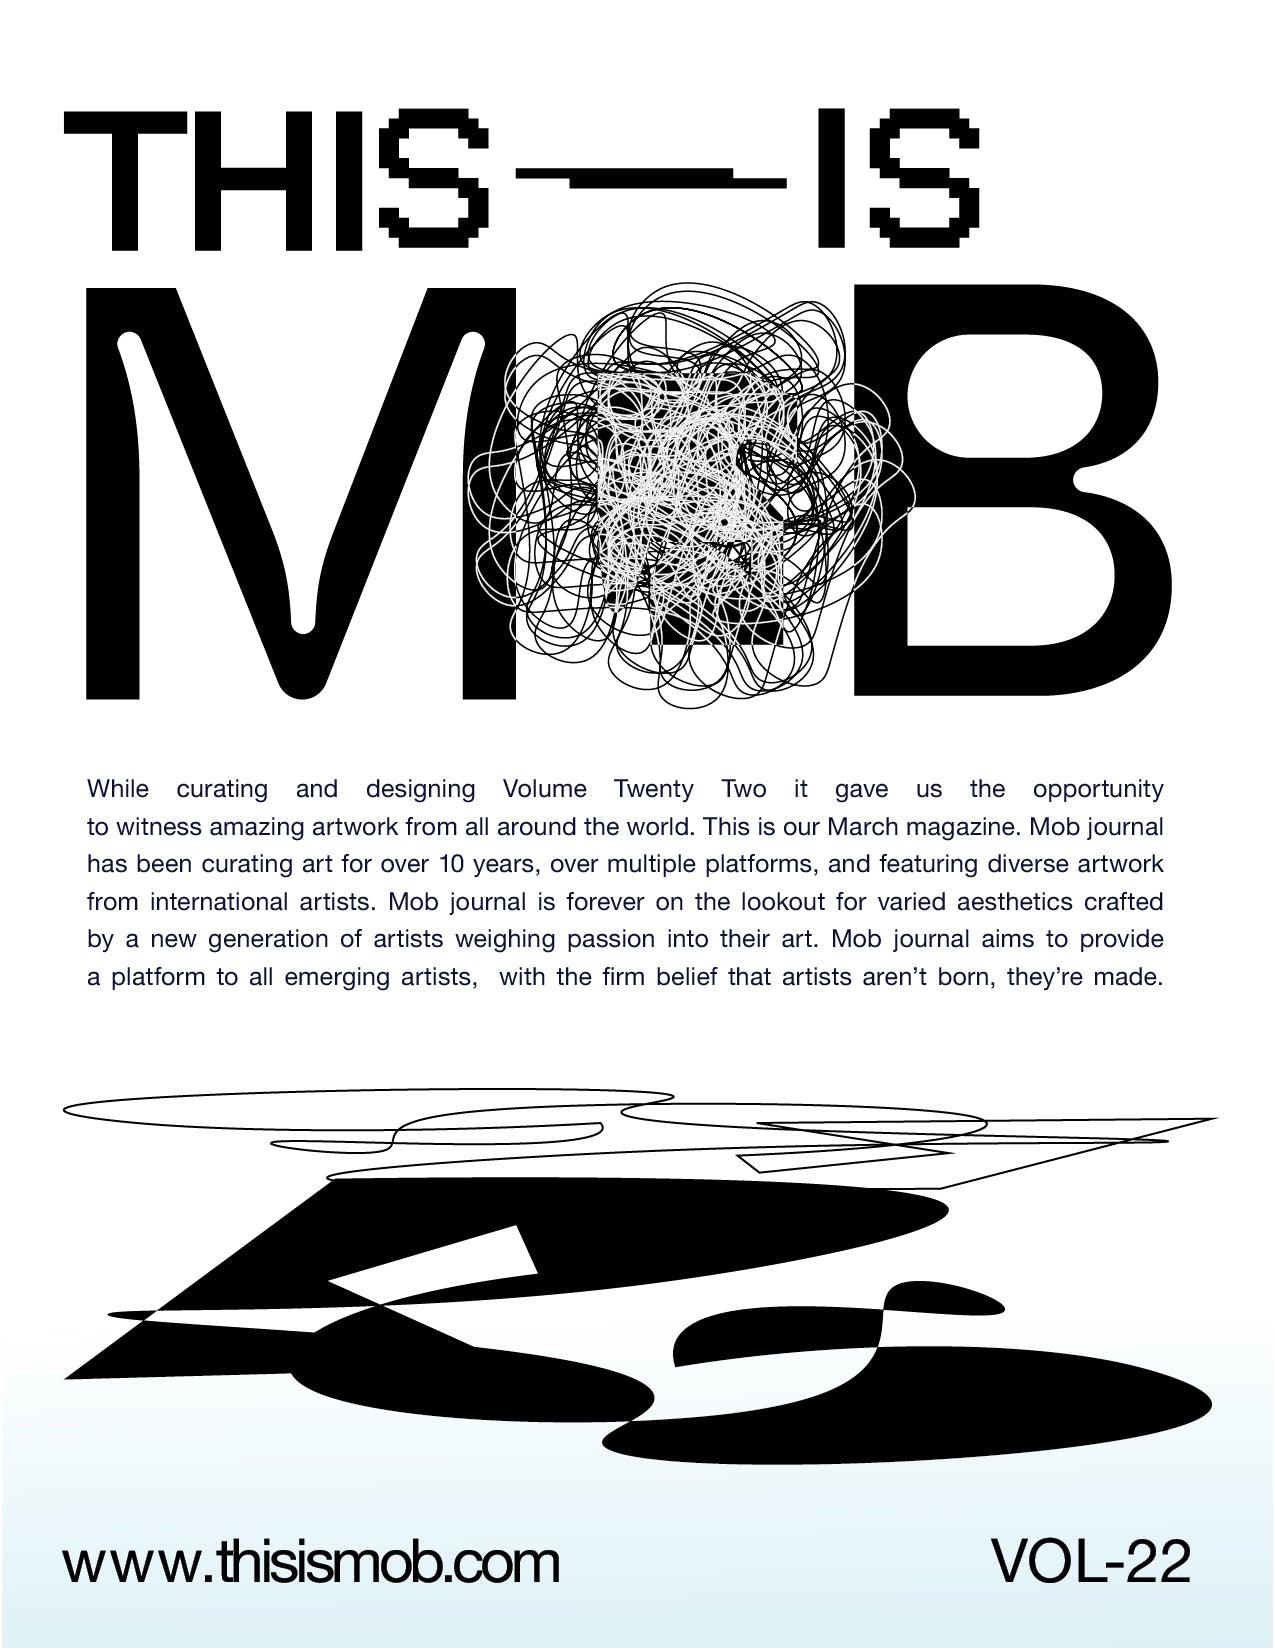 MOB JOURNAL | VOLUME TWENTY TWO | ISSUE #57 - Mob Journal